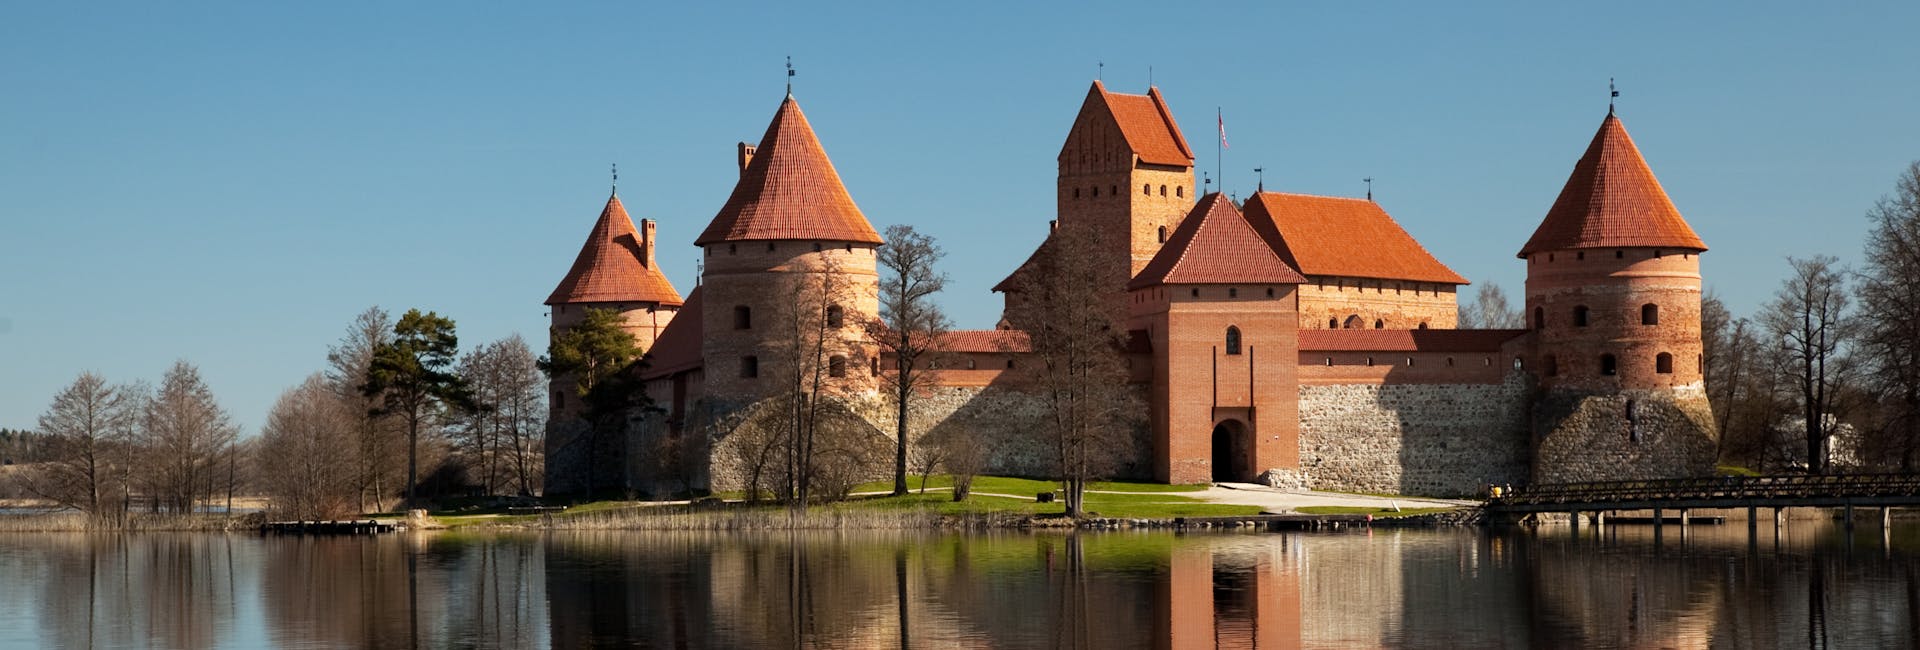 Trakai-linna Trakaissa